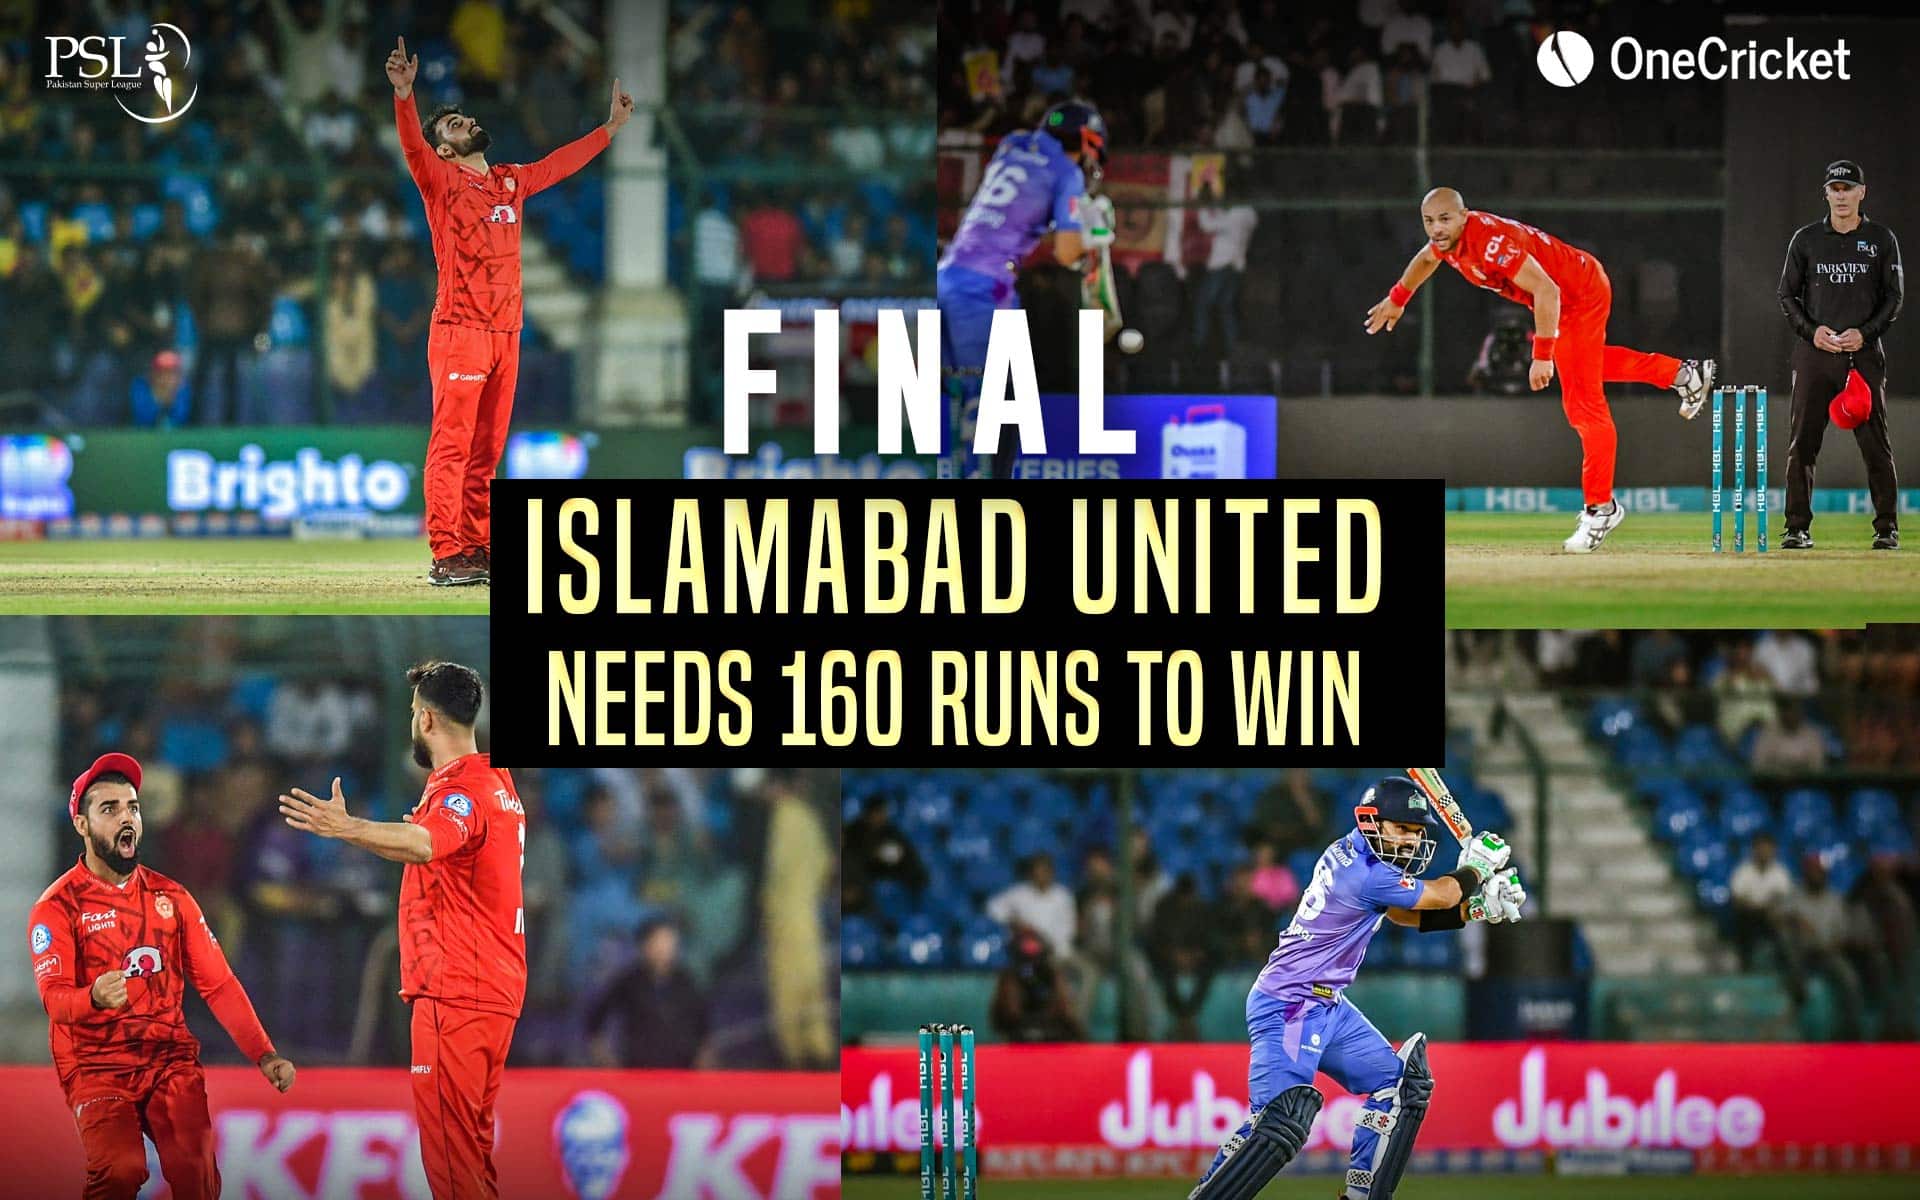 Islamabad United need 160 run to win (Source: PSL)